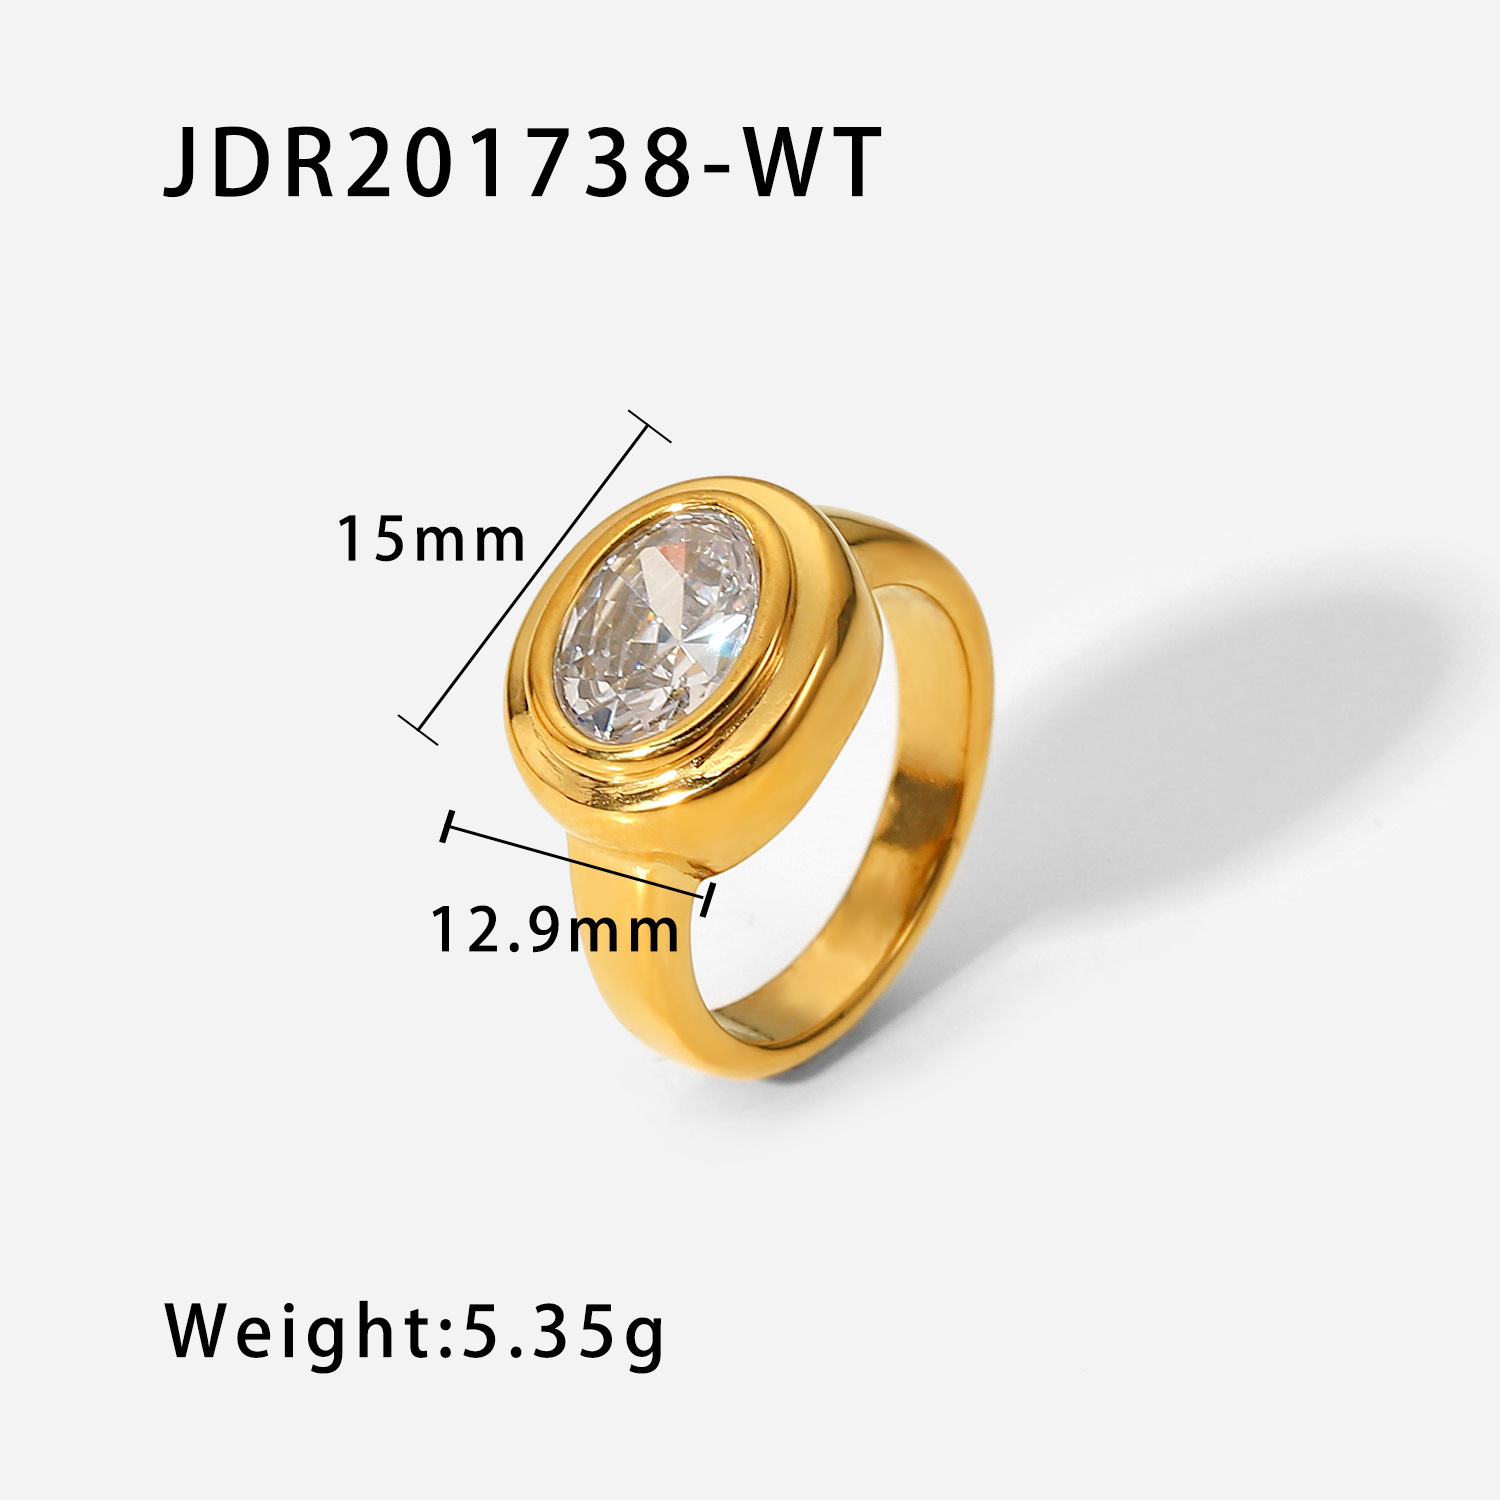 JDR201738-WT